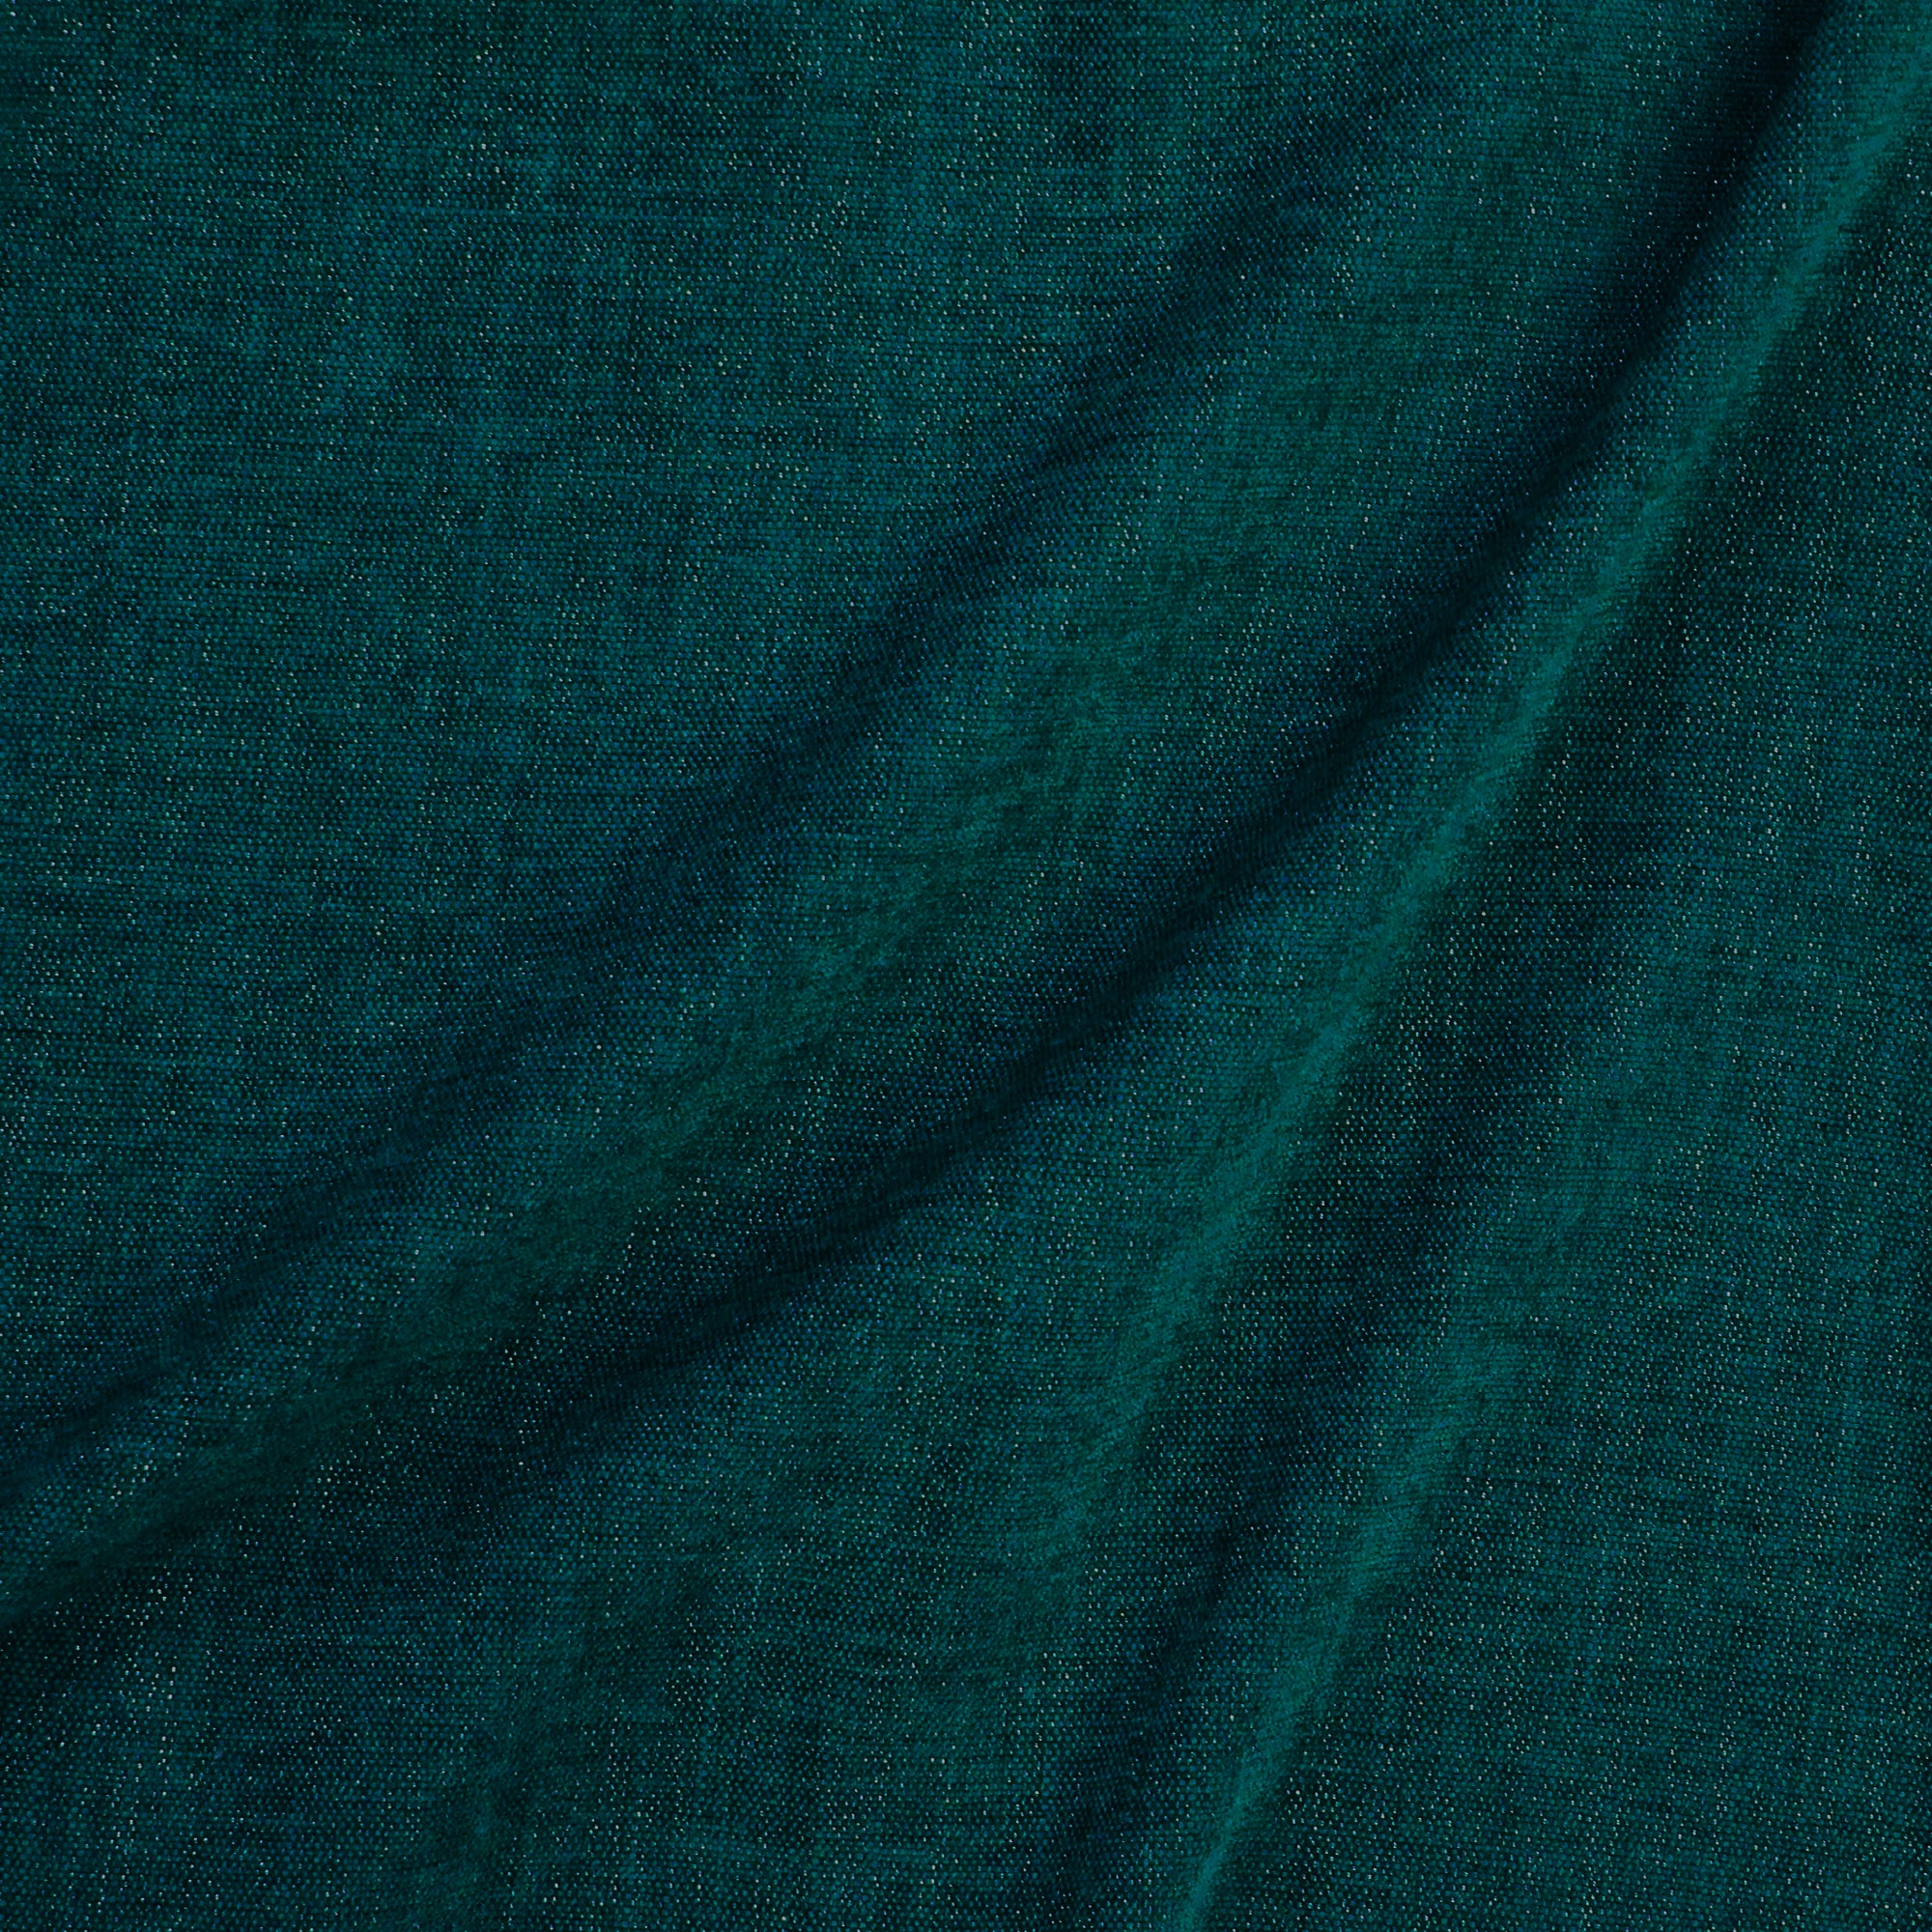 Pandora Fabric | Textured Metellic Linen Look (More Colors)